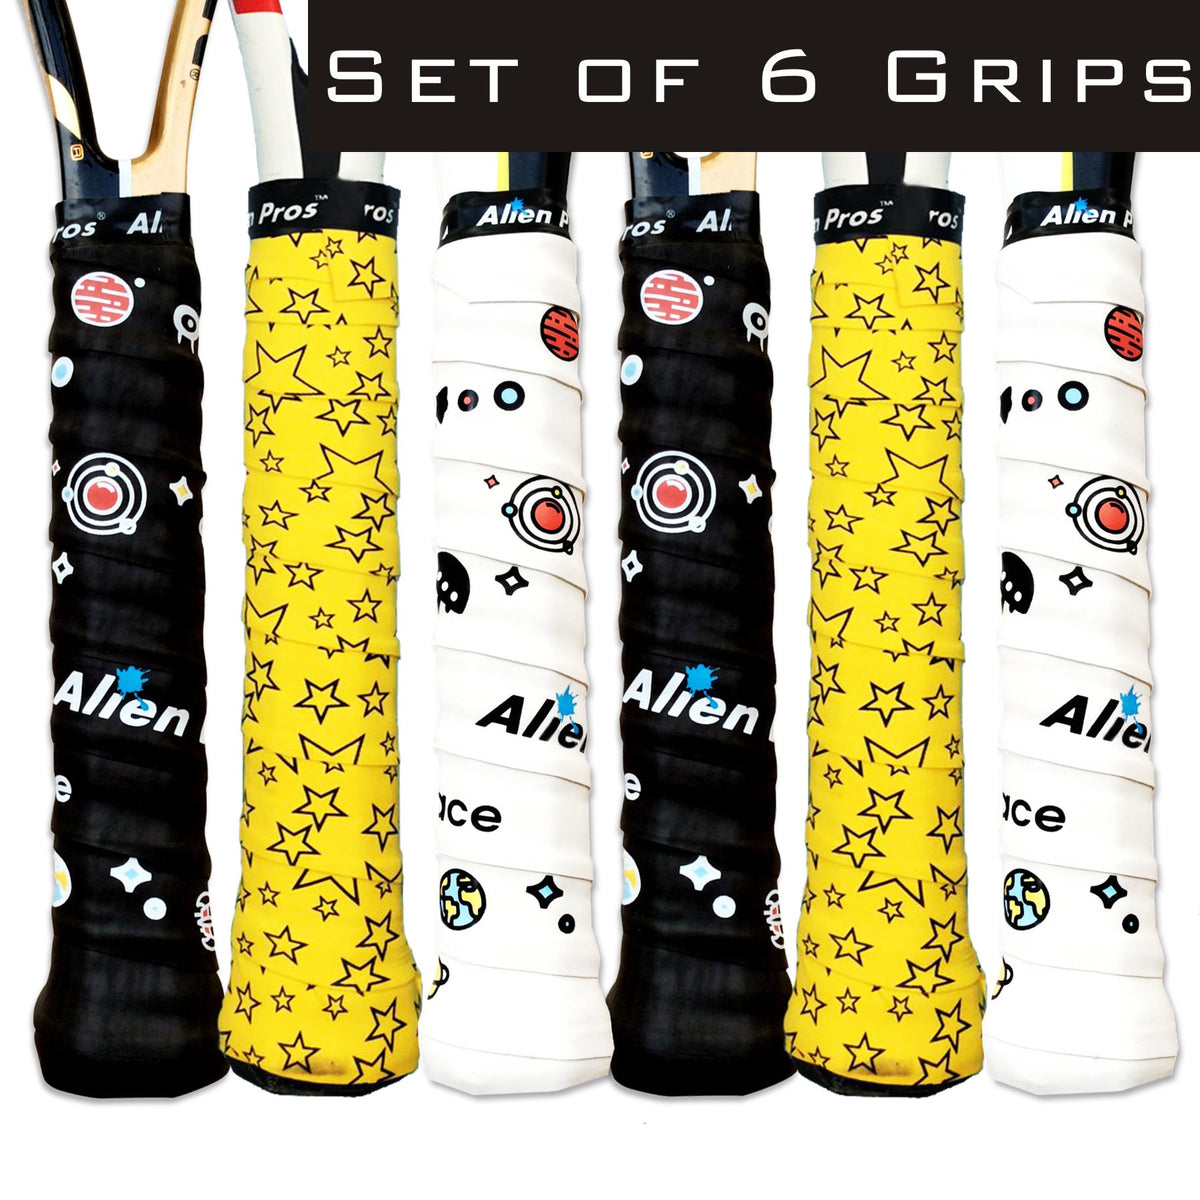 ALIEN PROS Tennis Racket Grip Tape (6 Grips) – Precut and Light Tac Feel  Tennis Grip – Tennis Overgrip Grip Tape Tennis Racket – Wrap Your Racquet  for